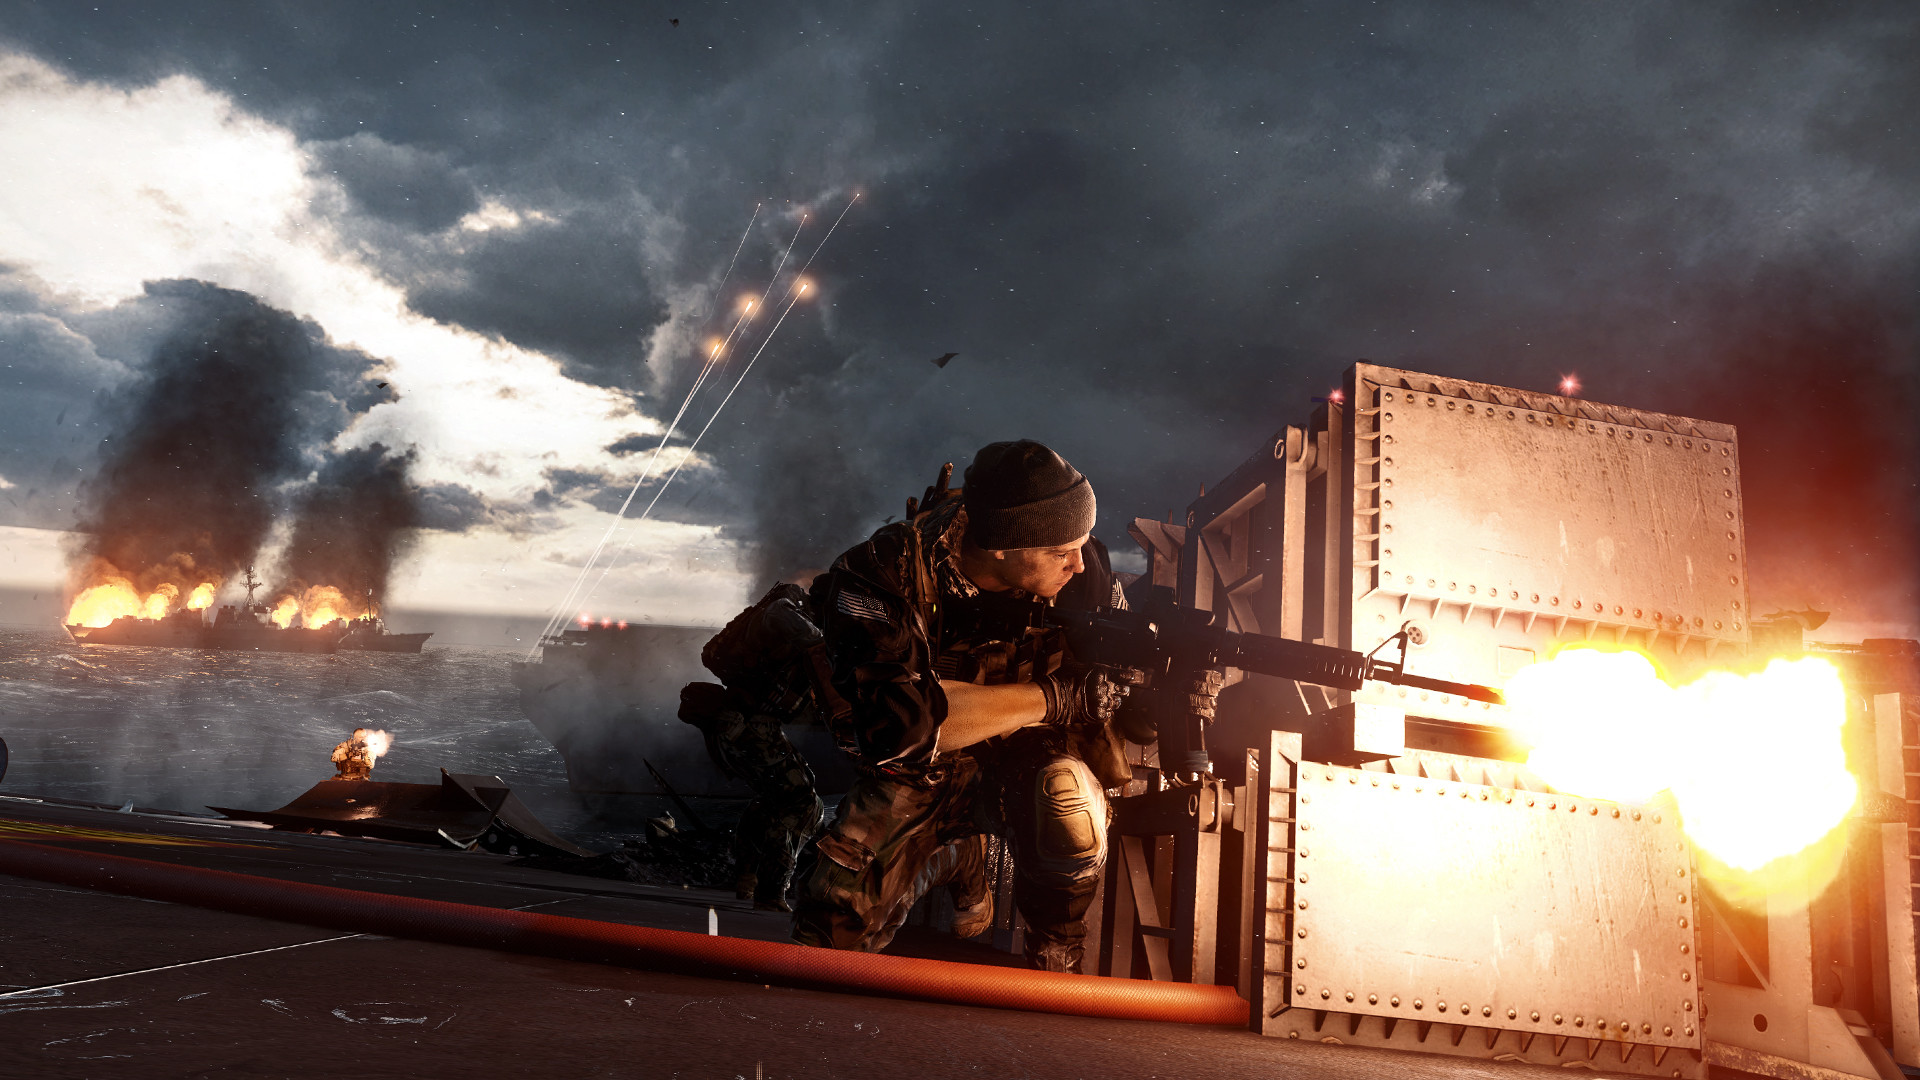 Battlefield 4 (PS4) preço mais barato: 8,00€